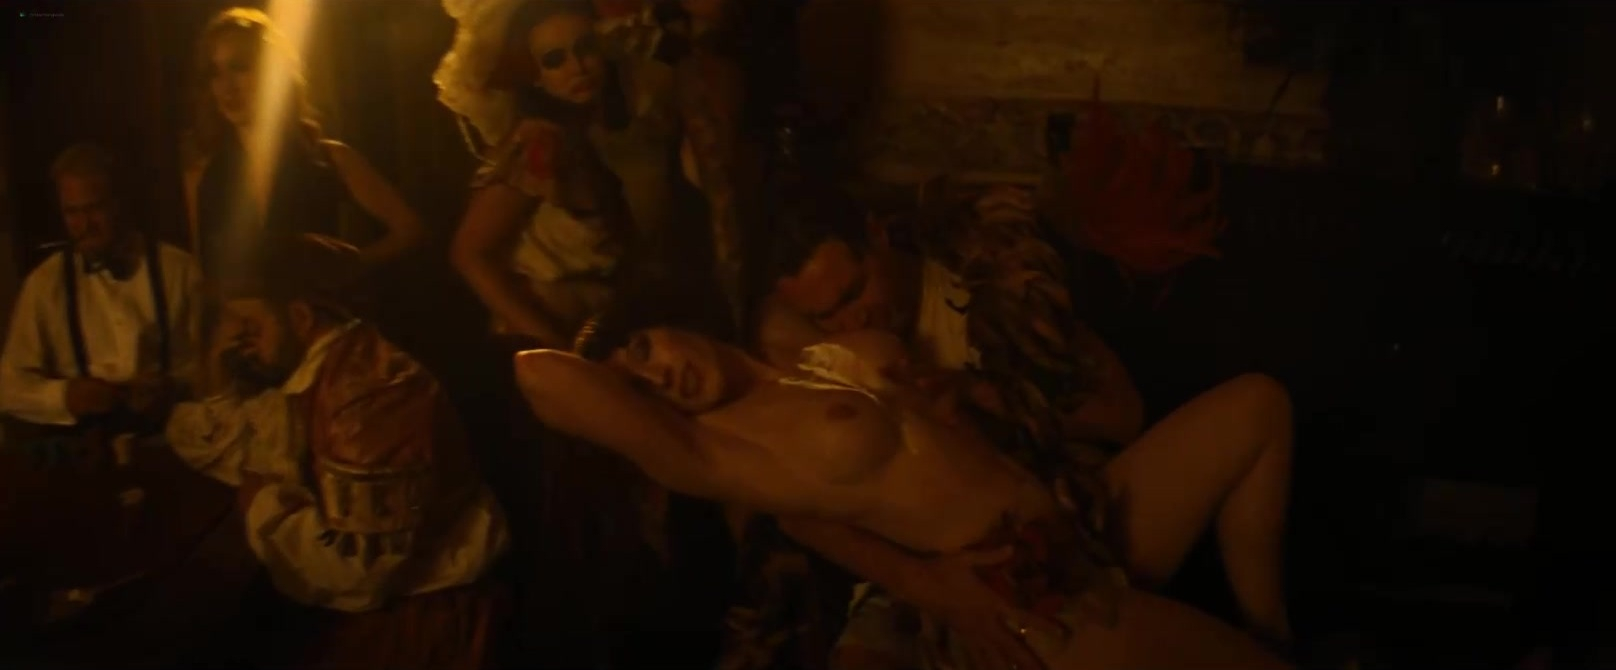 Margot robbie nude scene babylon